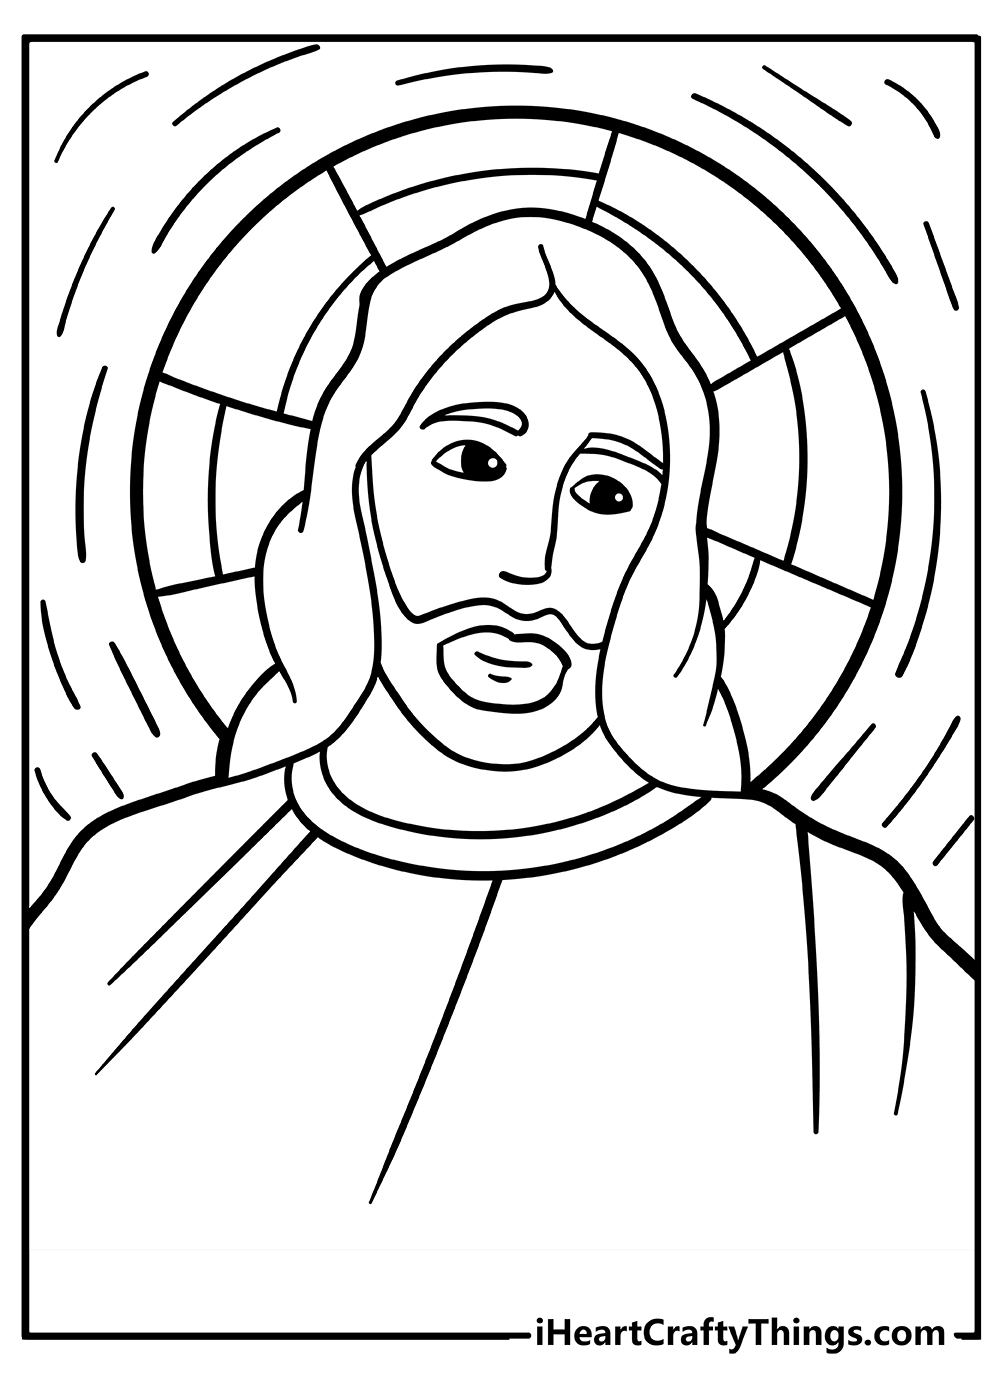 Jesus Coloring Sheet for children free download